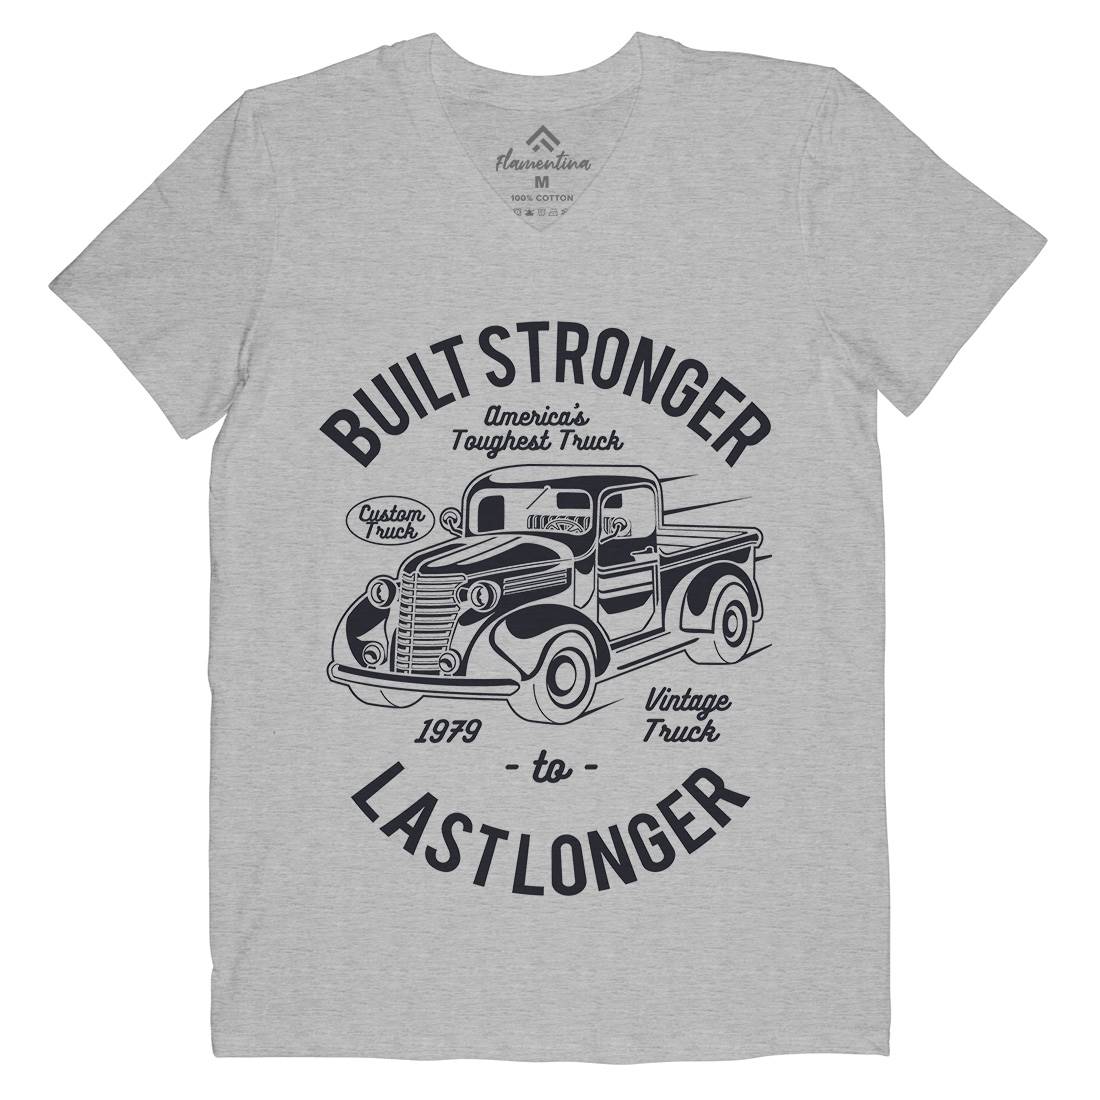 Built Stronger Mens V-Neck T-Shirt Cars A023